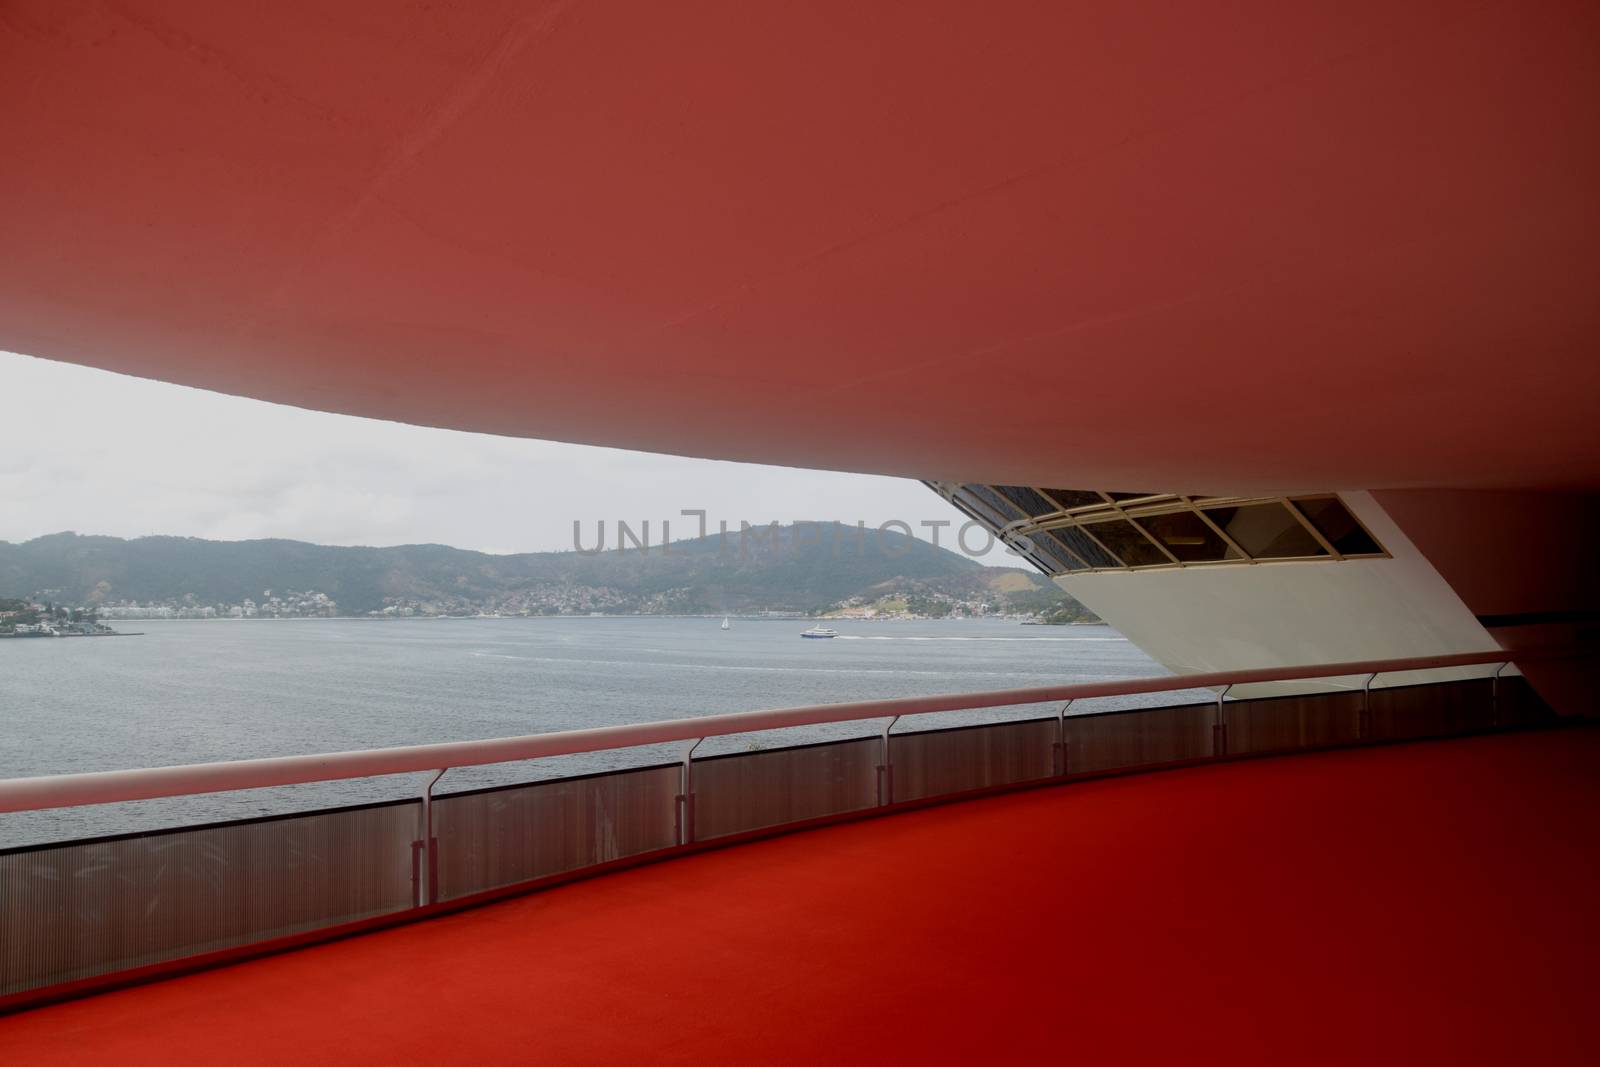 Oscar Niemeyer's Niteroi Contemporary Art Museum by eldervs